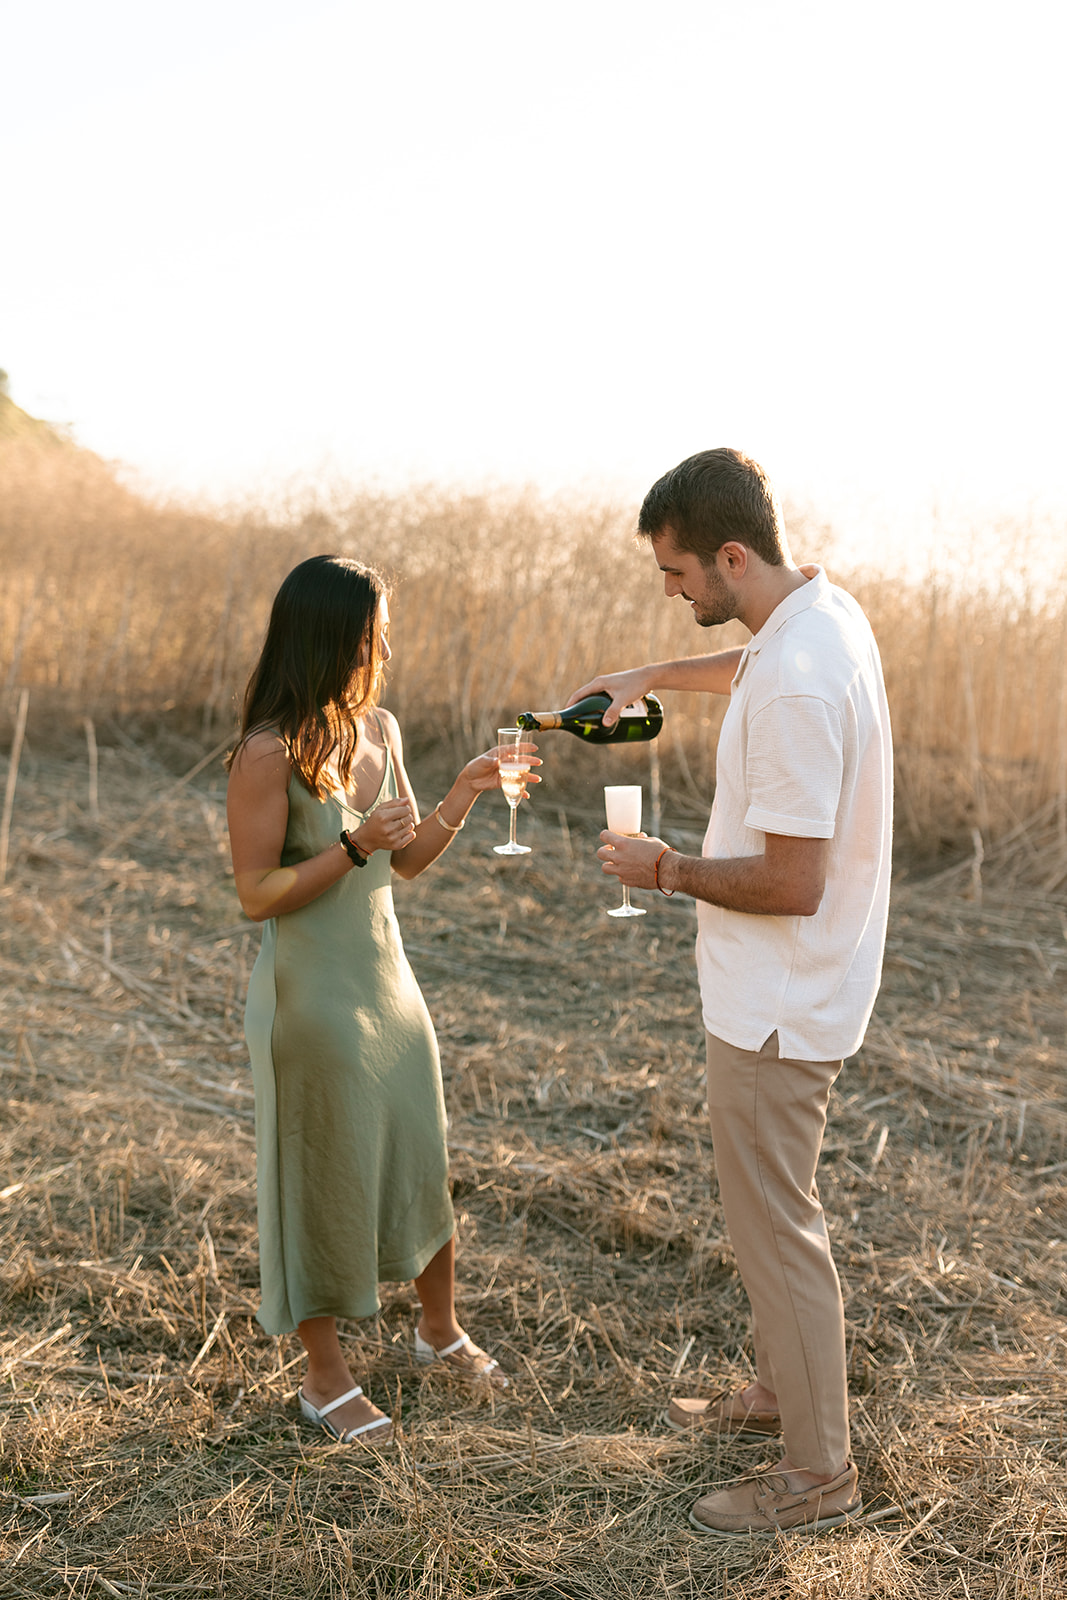 cliffside proposal engagement session palos verdes california socal couples poses ideas orange county photographer